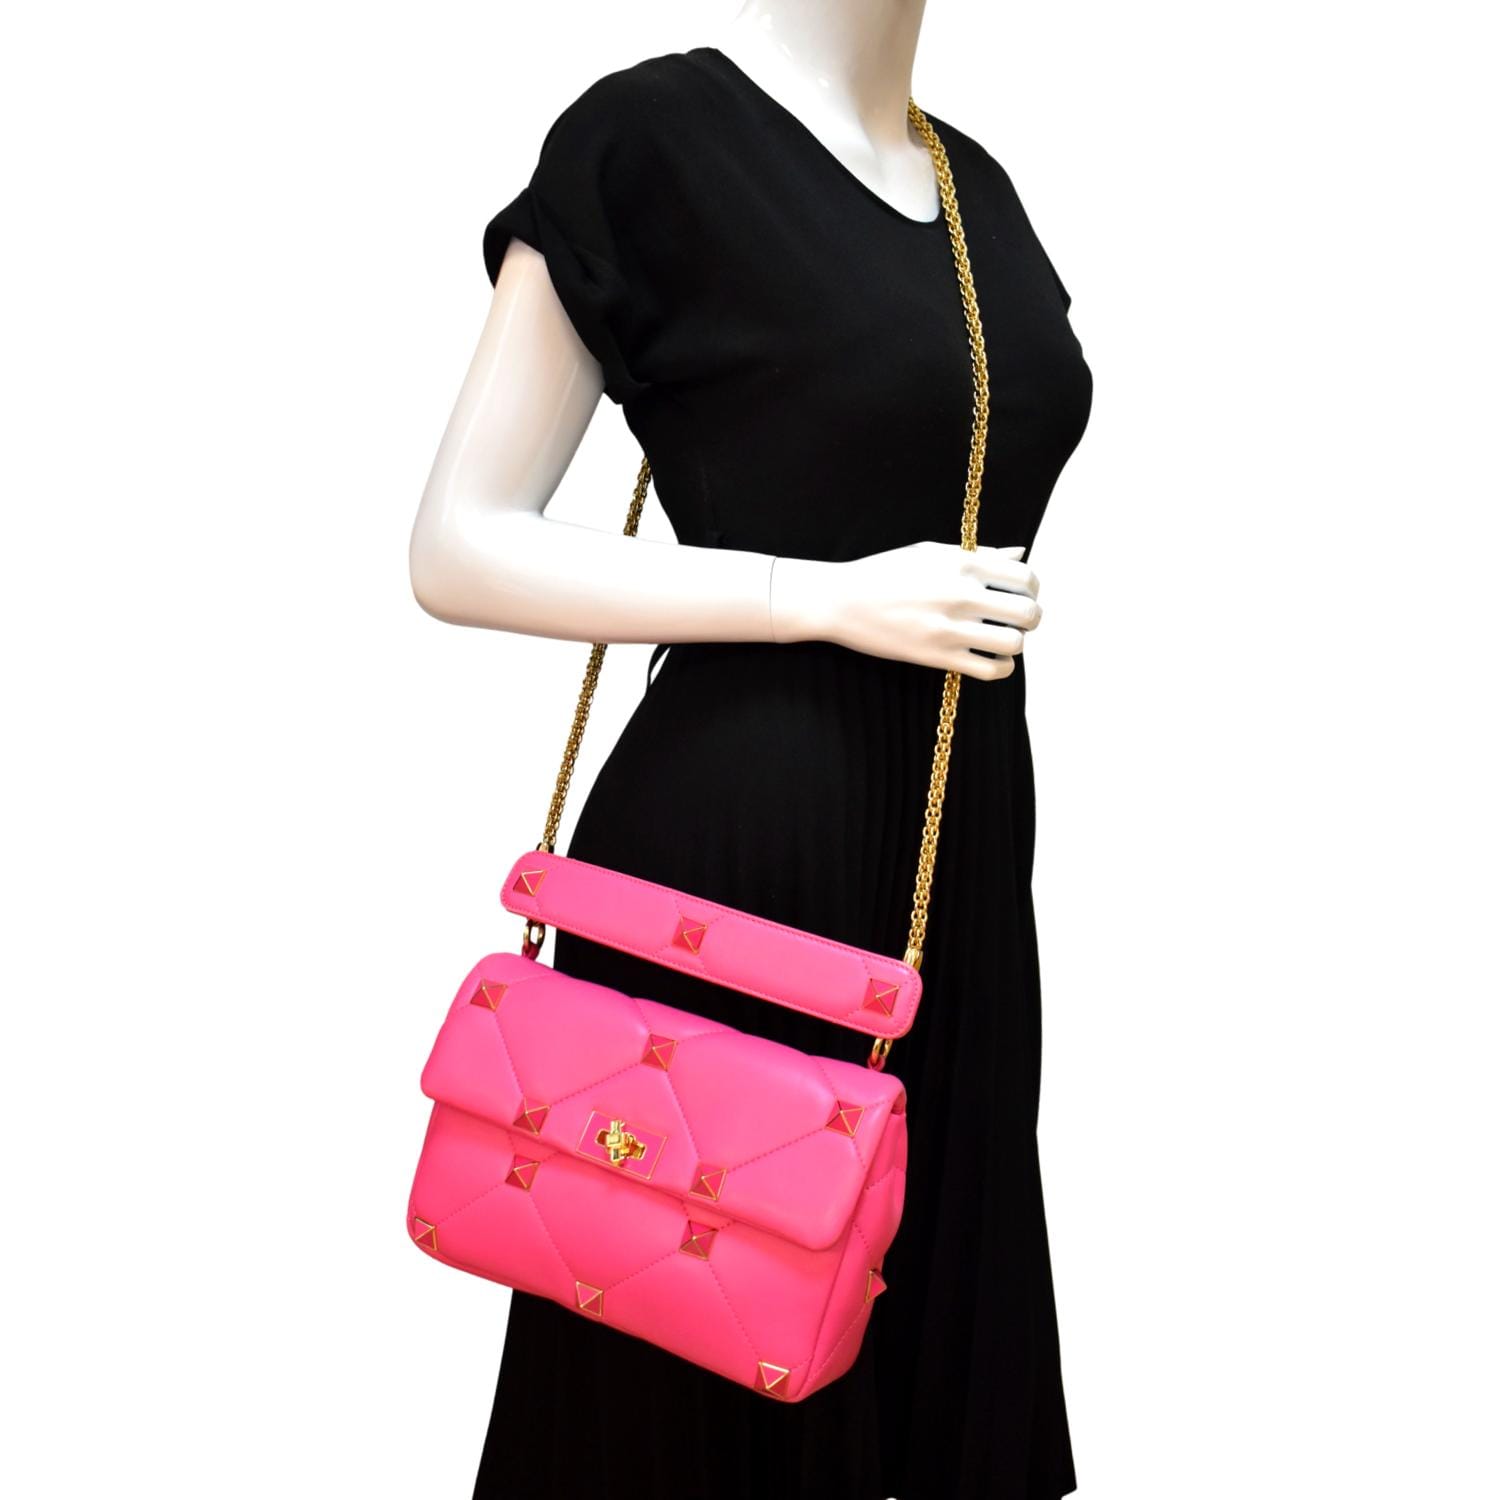 Valentino Pink Leather Small Roman Stud Top Handle Bag Valentino